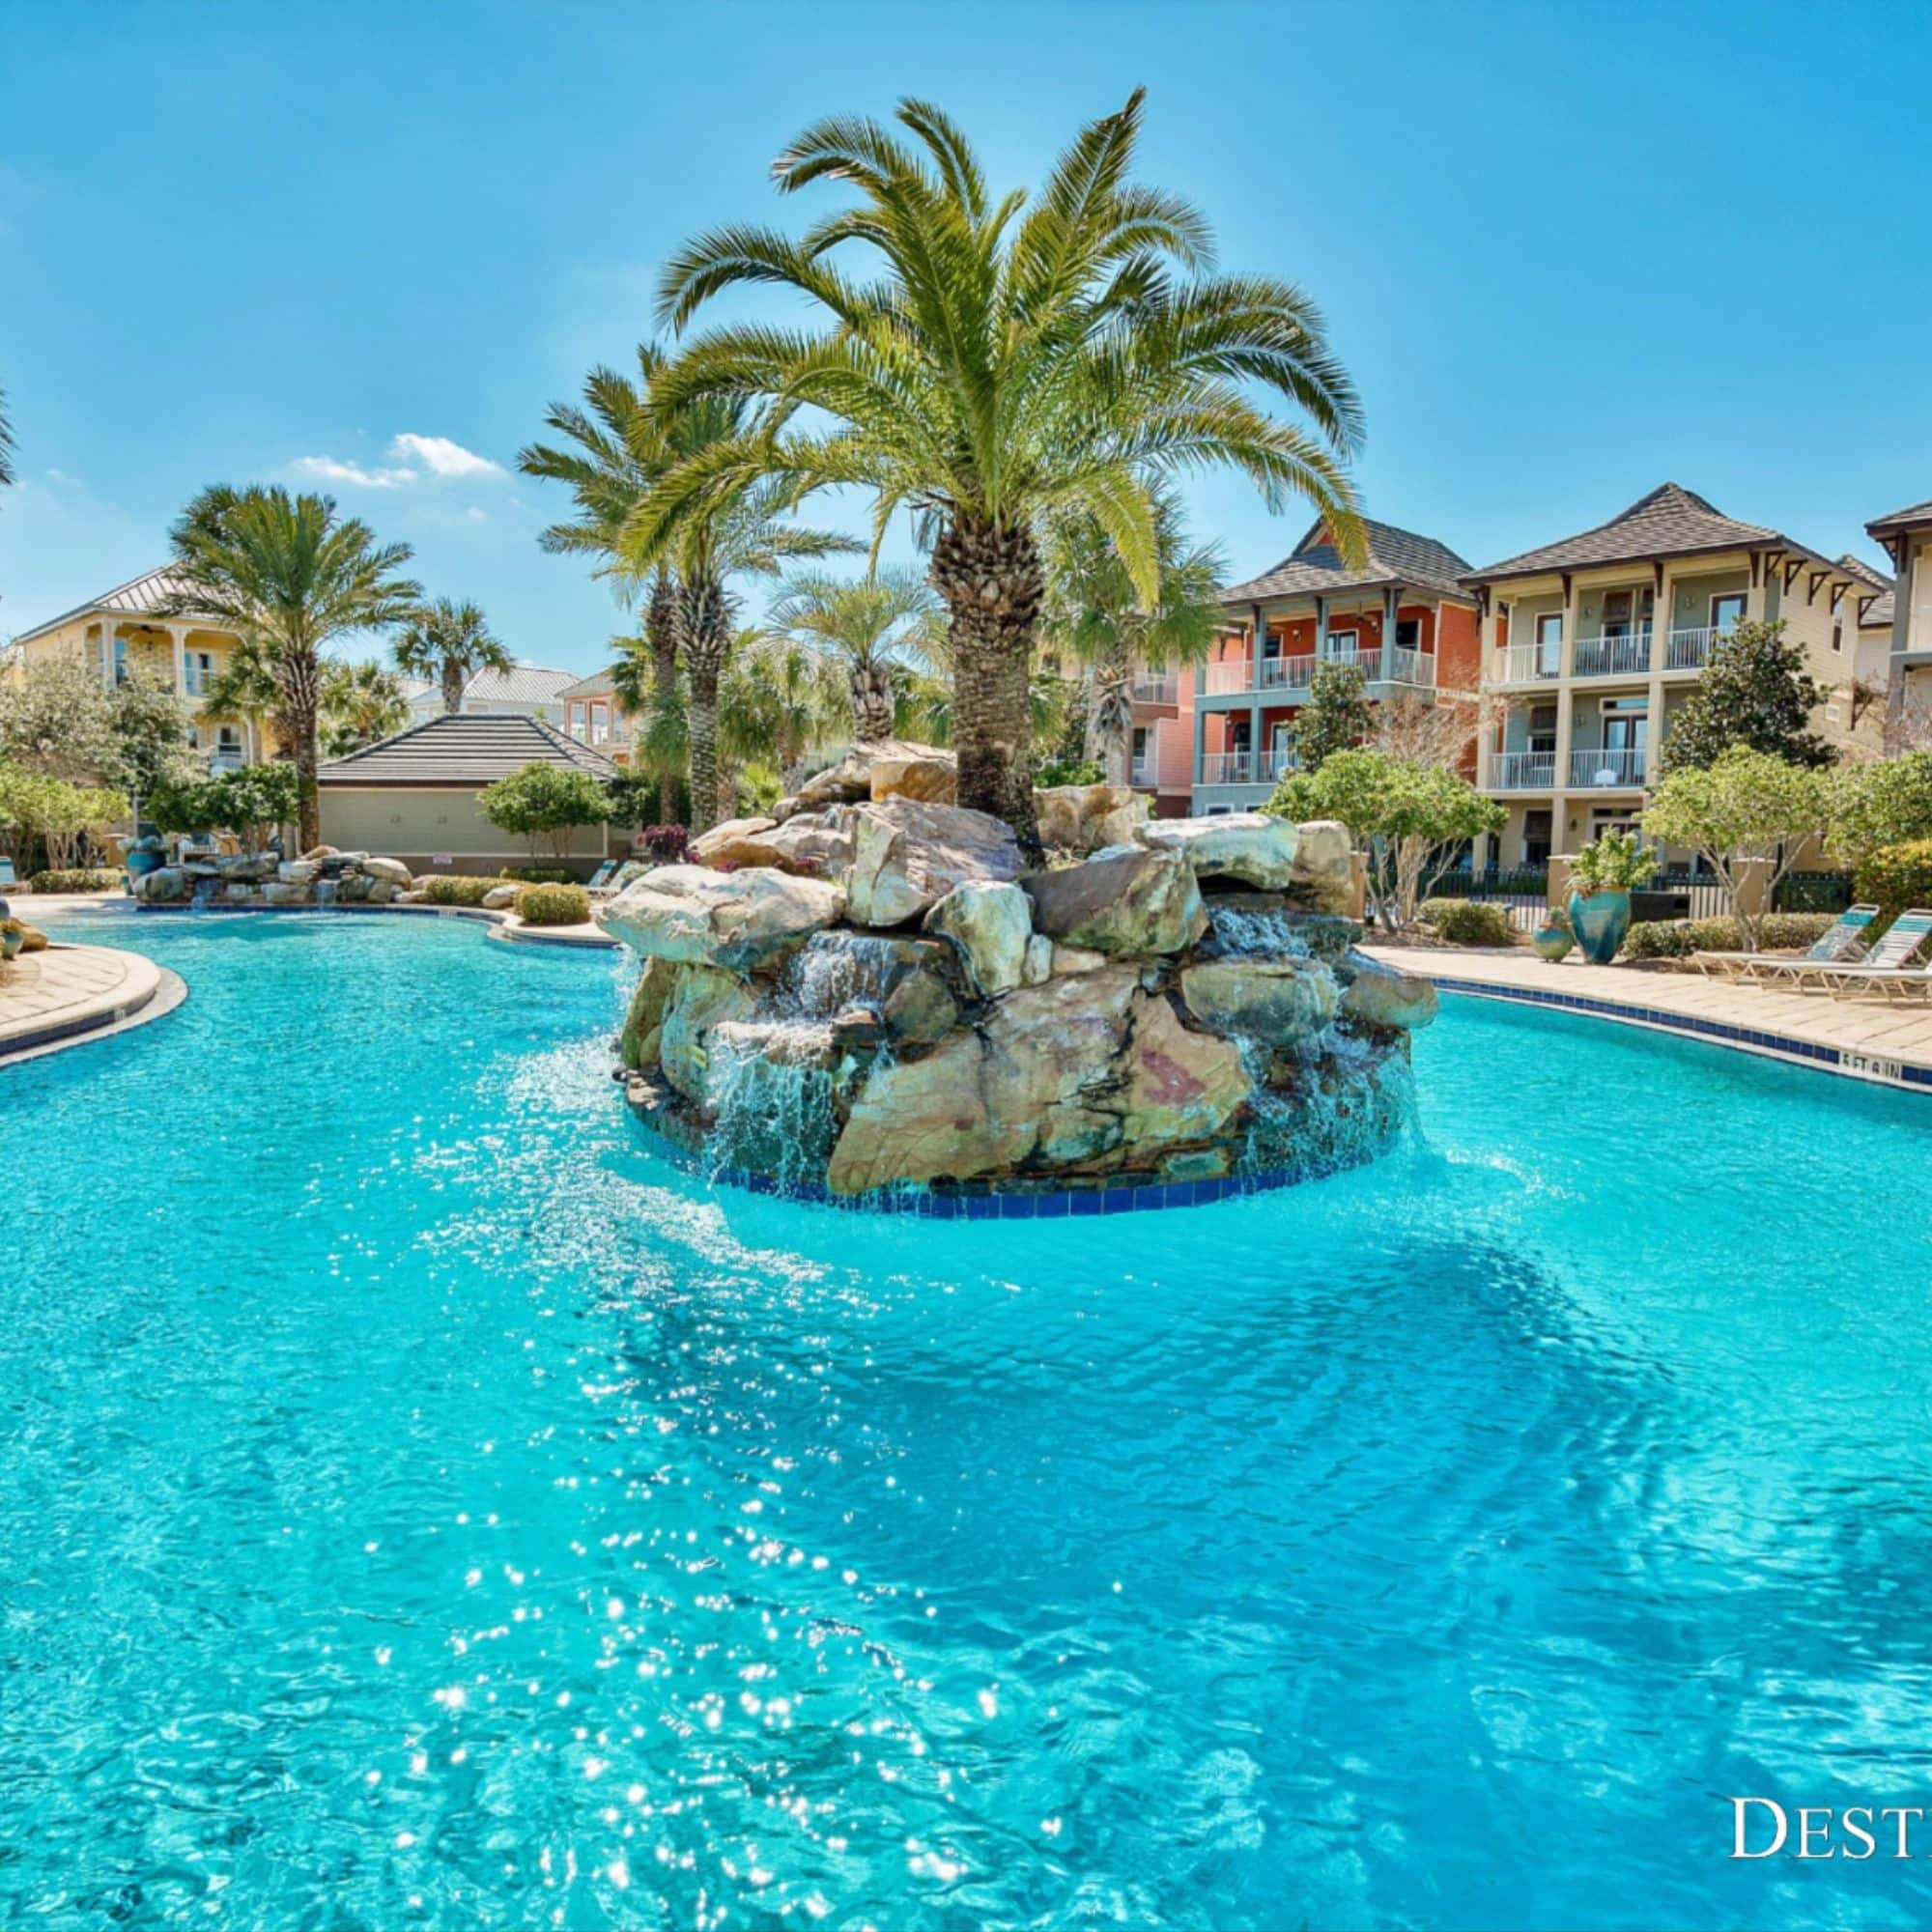 This dream vacation rental home in Destin, FL, Seas The Dream, is ...